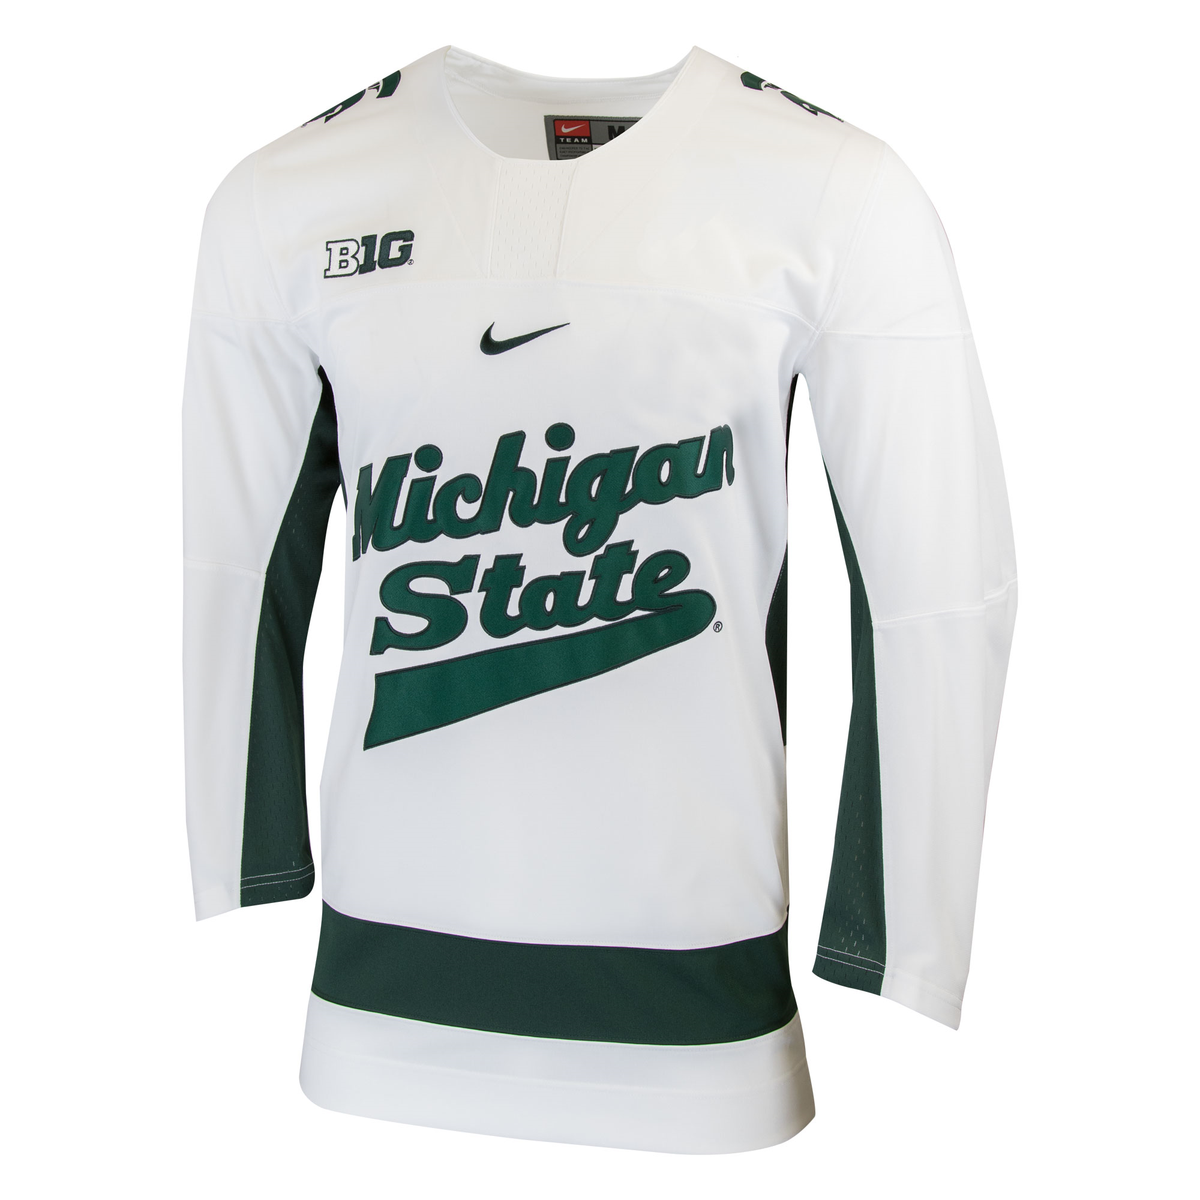 Spartans, Michigan State Nike Replica Baseball Jersey